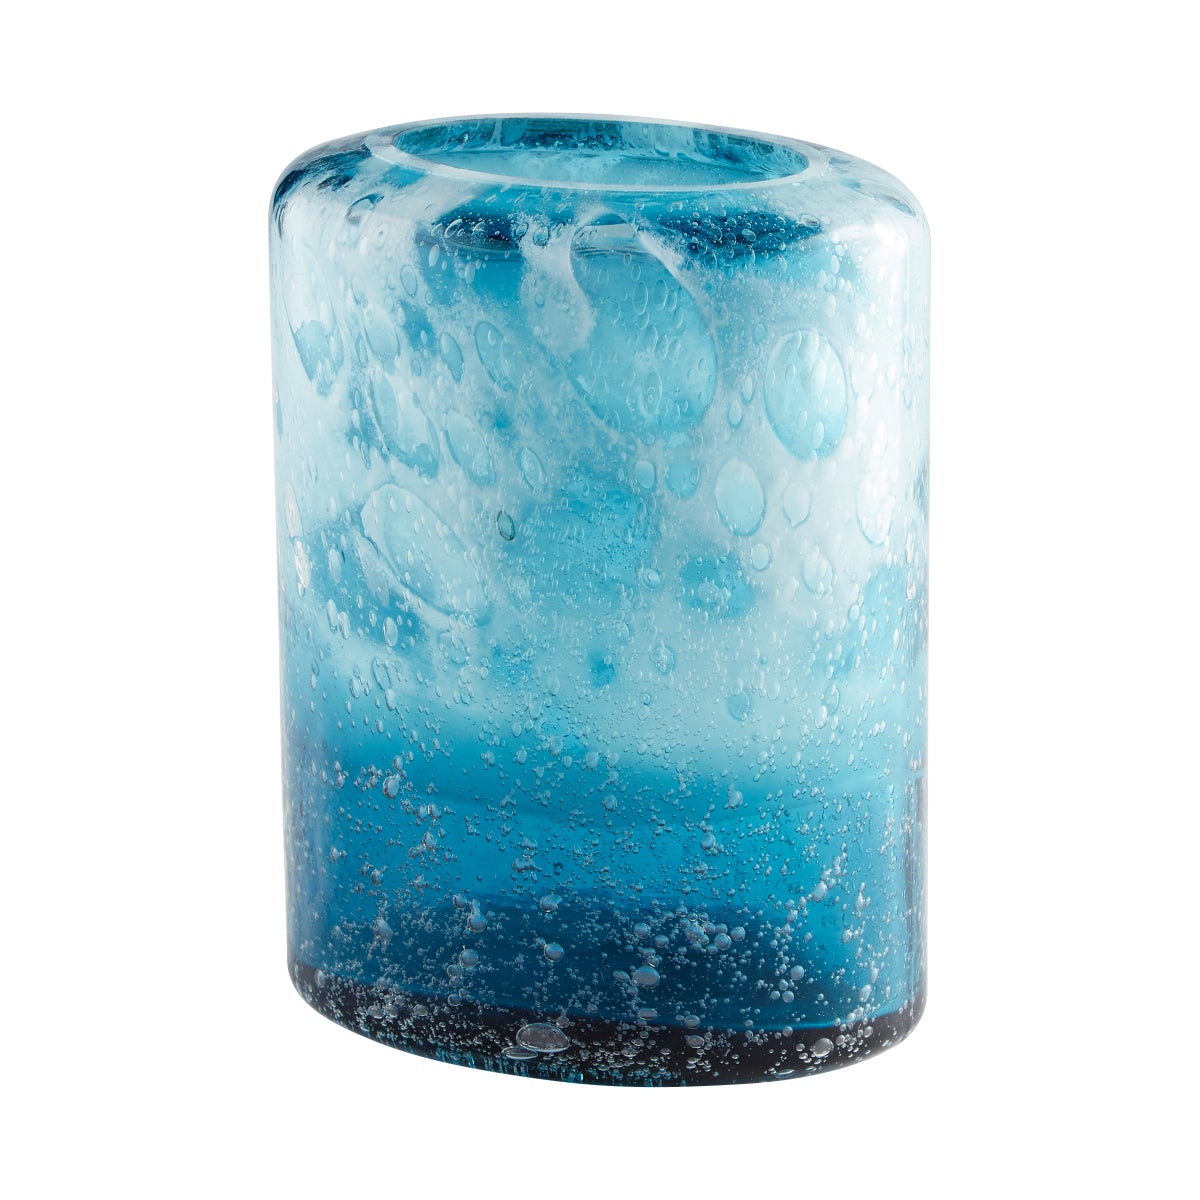 Spruzzo Vase - Blue And White Small